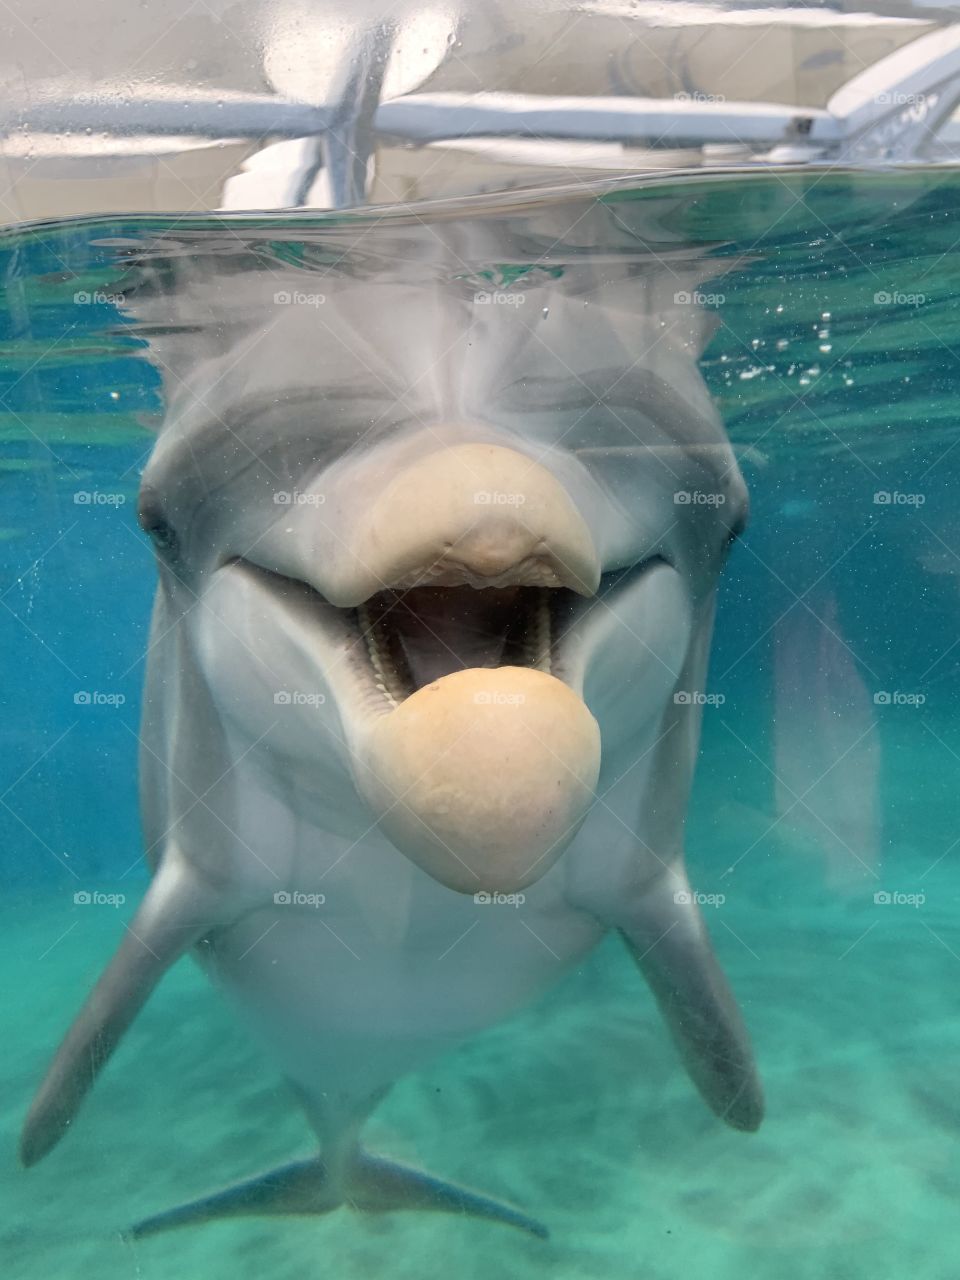 #day74 111319 SeaWorld Orlando.  Meet baby dolphin, Storm! Join me in the fun @Selsa_Susanna highlights or https://www.facebook.com/selsa.susanna